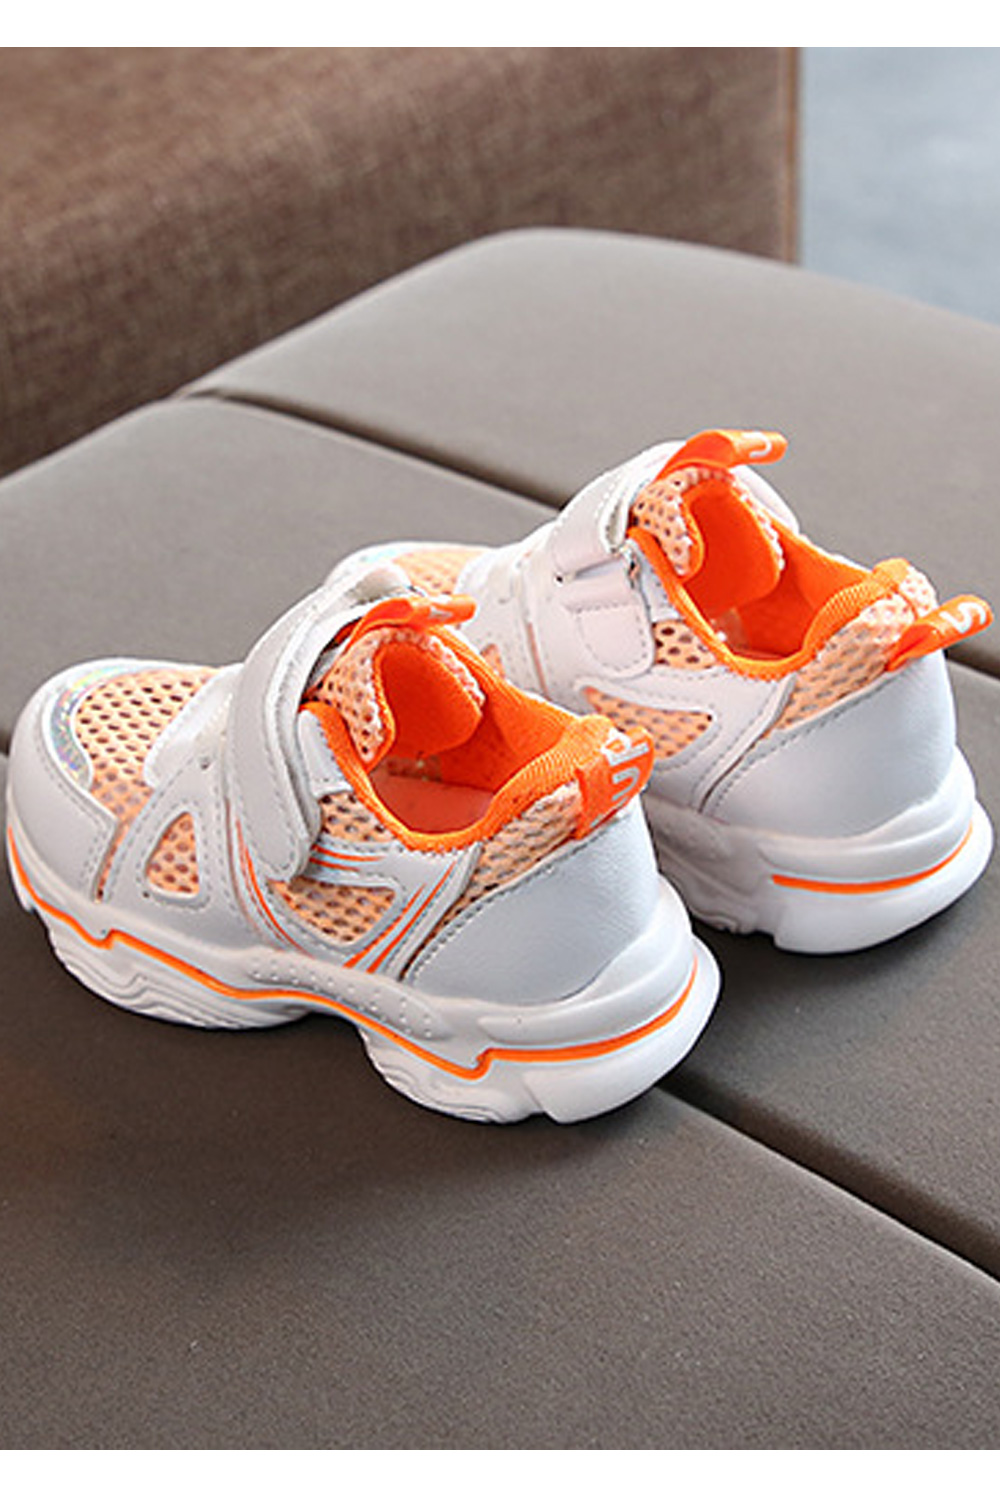 Selected Color is 2008 fluorescent net shoes orange